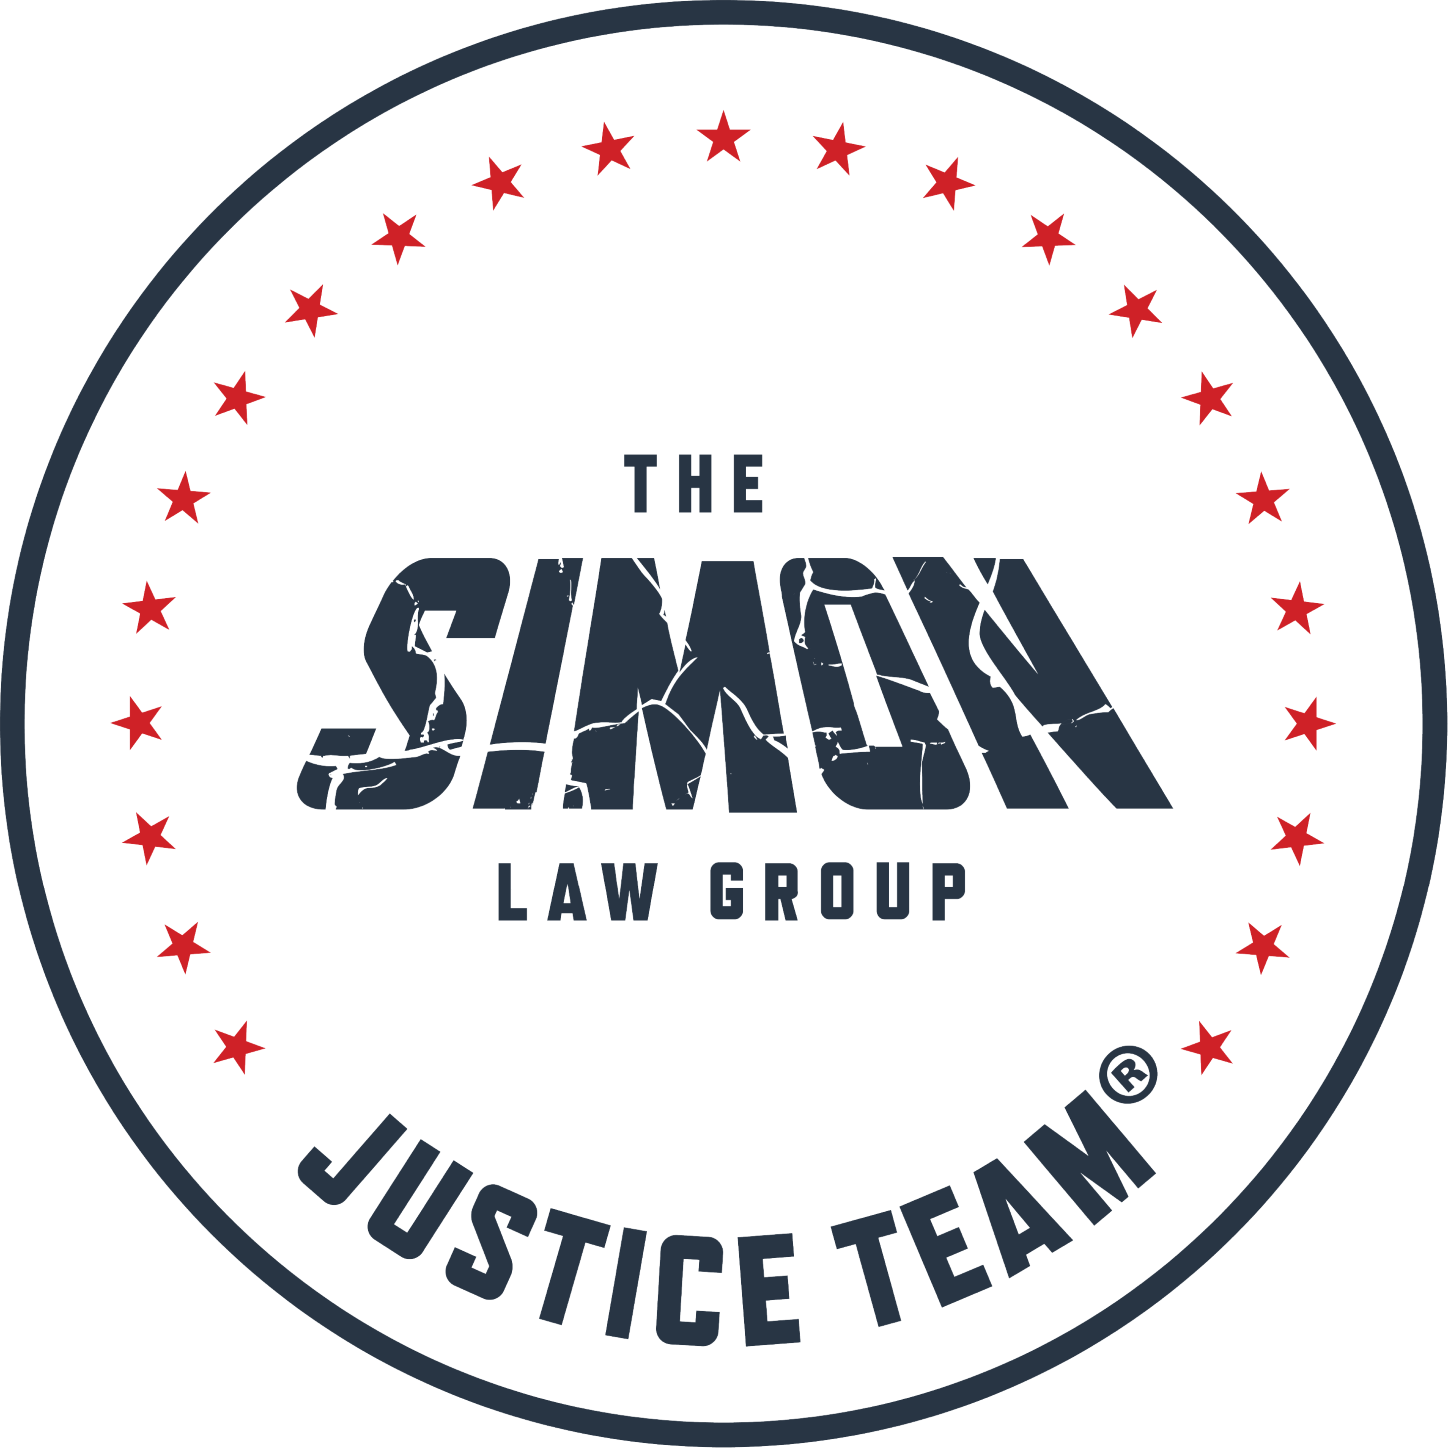 Simon Law Group